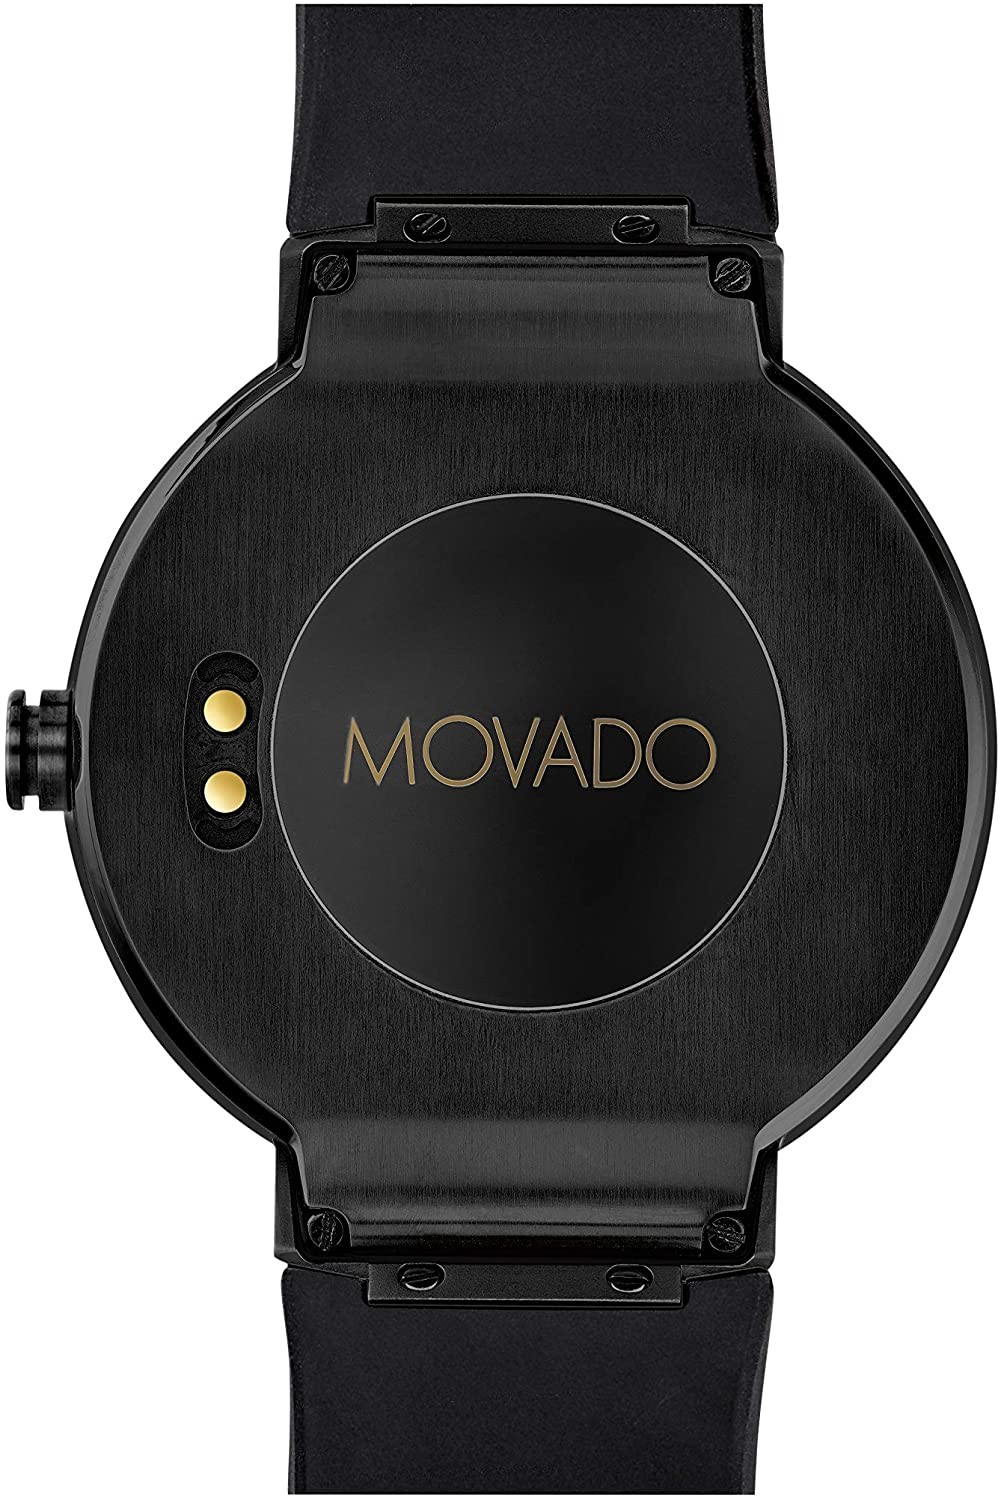 Movado Connect Digital Smart Module Black PVD Smartwatch, Grey/Black & Brown Strap